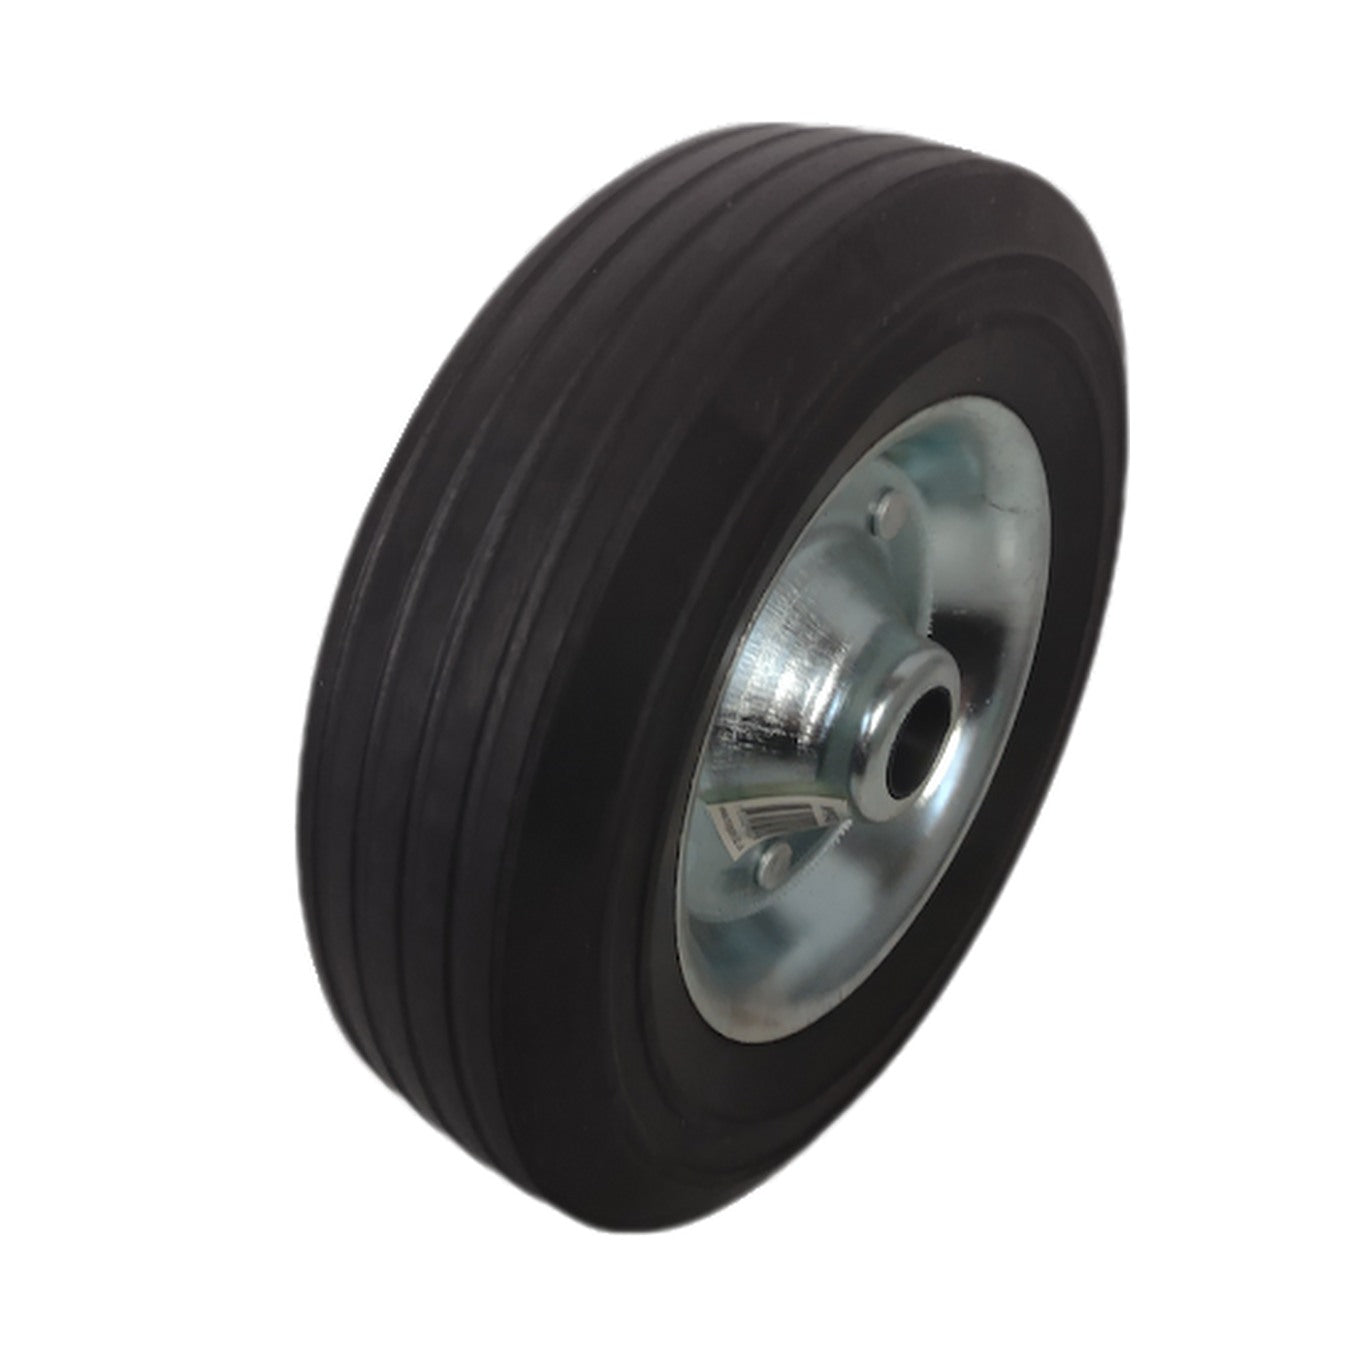 Replacement Steel Wheel, Spare Wheel for MP9742 Jockey Wheel 200 x 58mm rubber tyre 300Kg MP97426